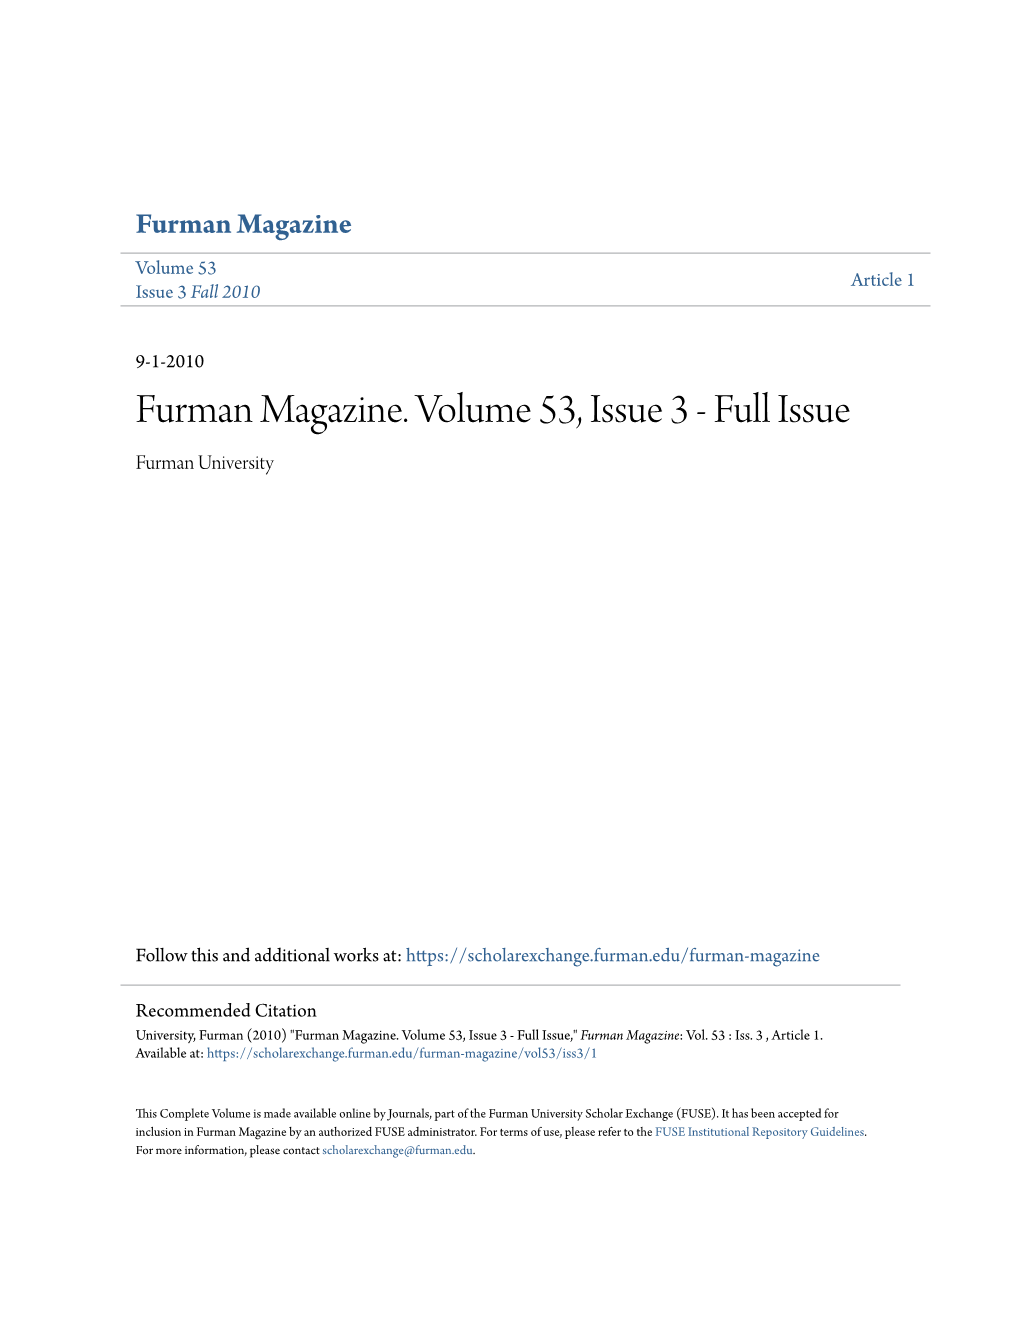 Furman Magazine. Volume 53, Issue 3 - Full Issue Furman University